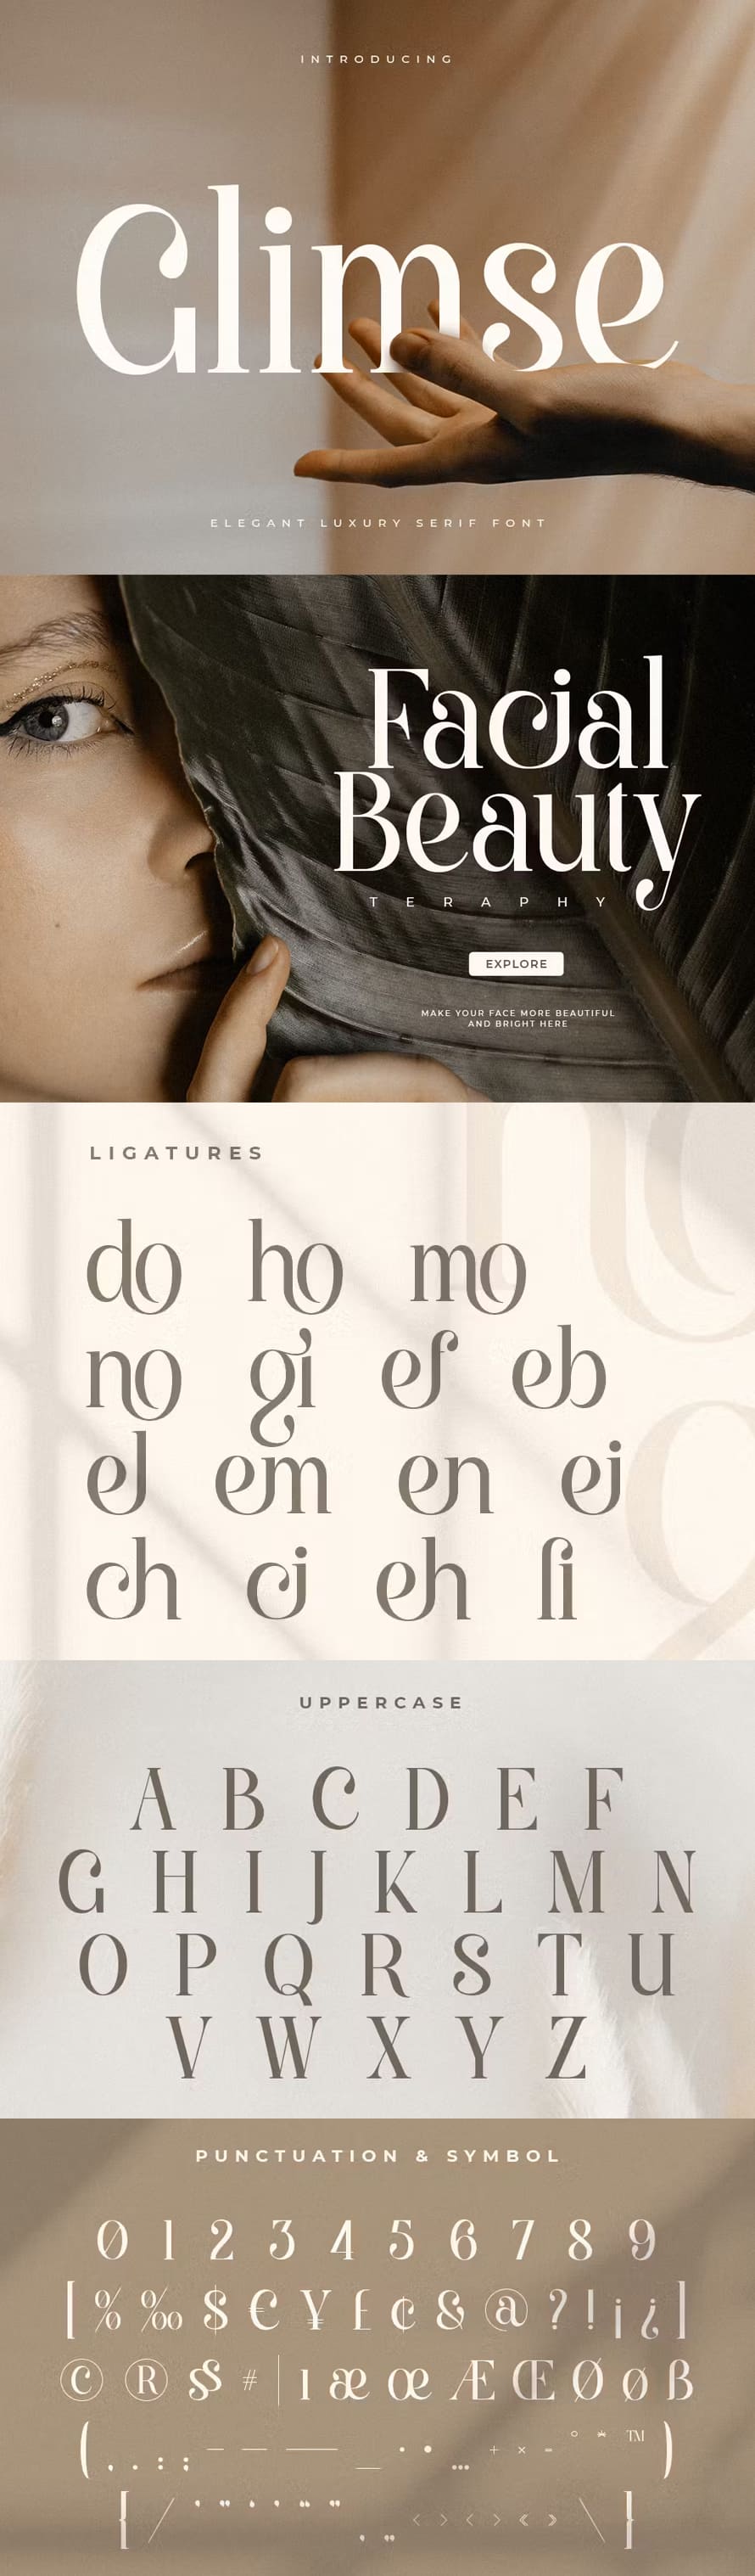 Glimse Elegant Luxury Serif Font